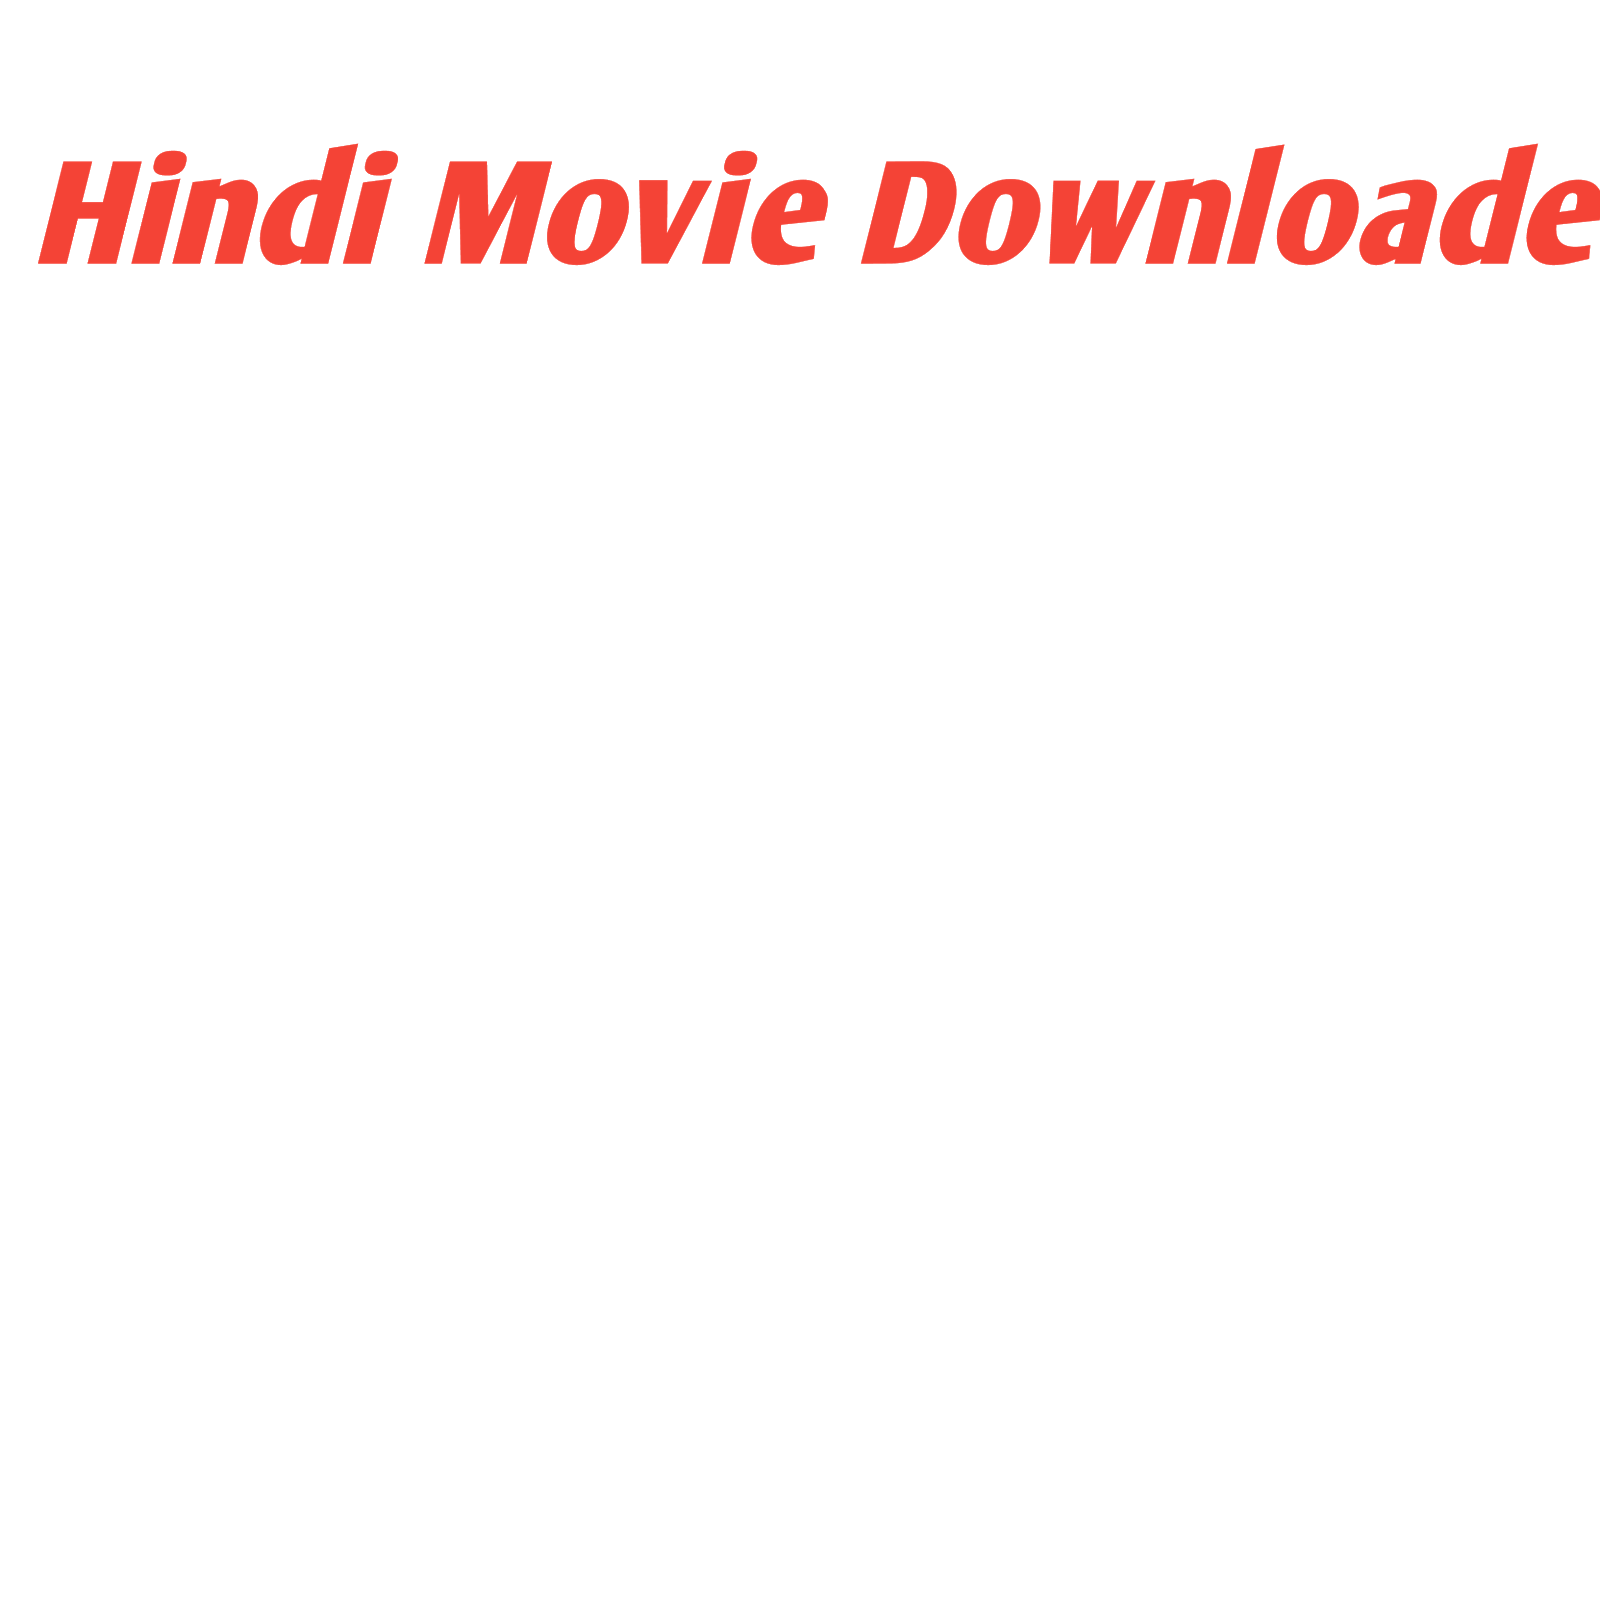  Hindi Movie Downloade